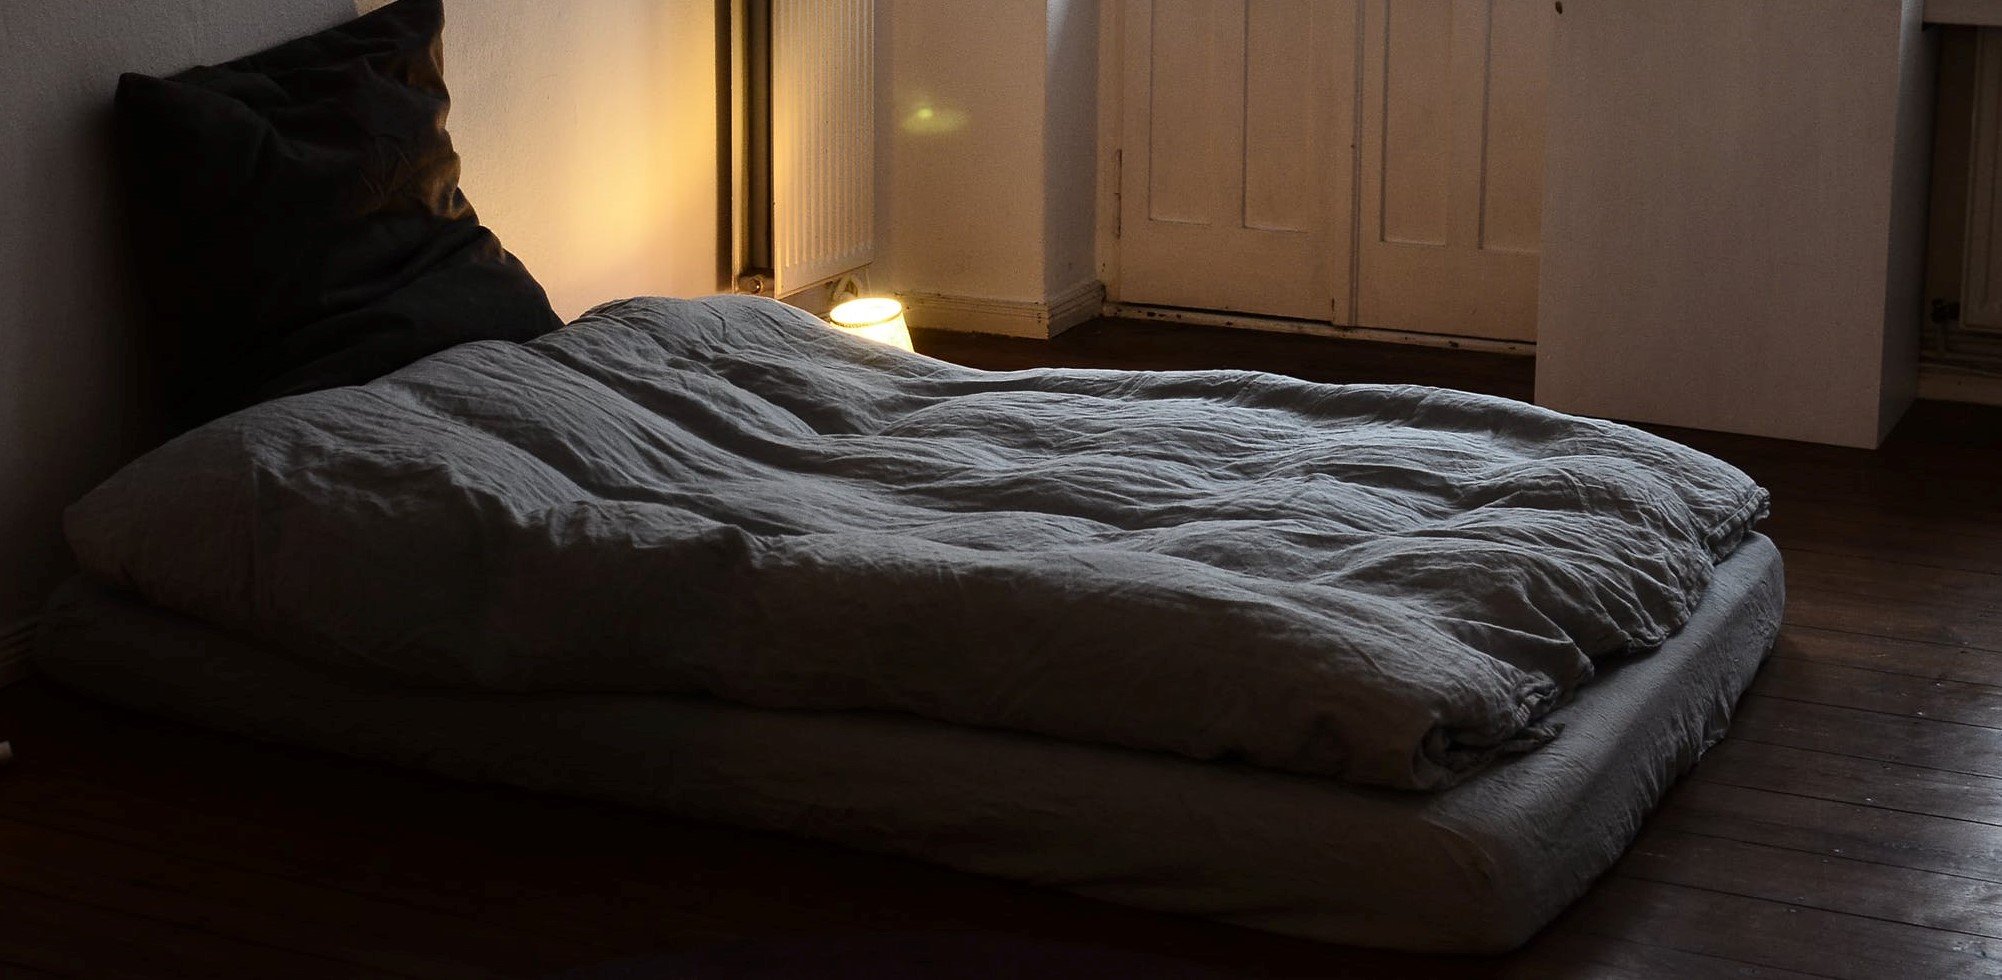 Jack's room just had a mattress on the floor | Source: Pexels